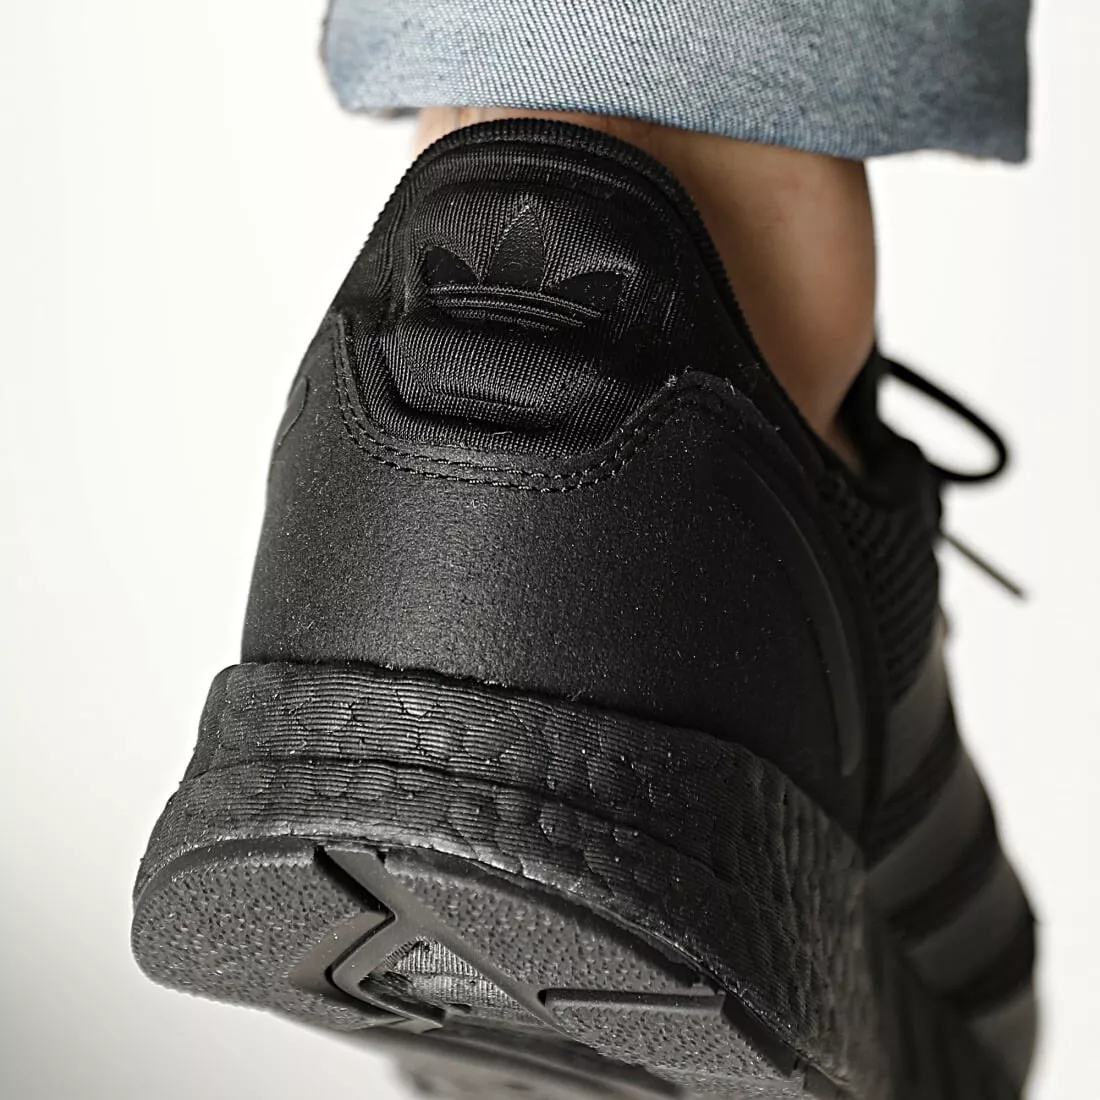 Adidas Originals ZX 1K Boost Men’s Athletic Sneaker Running Shoe Black #721